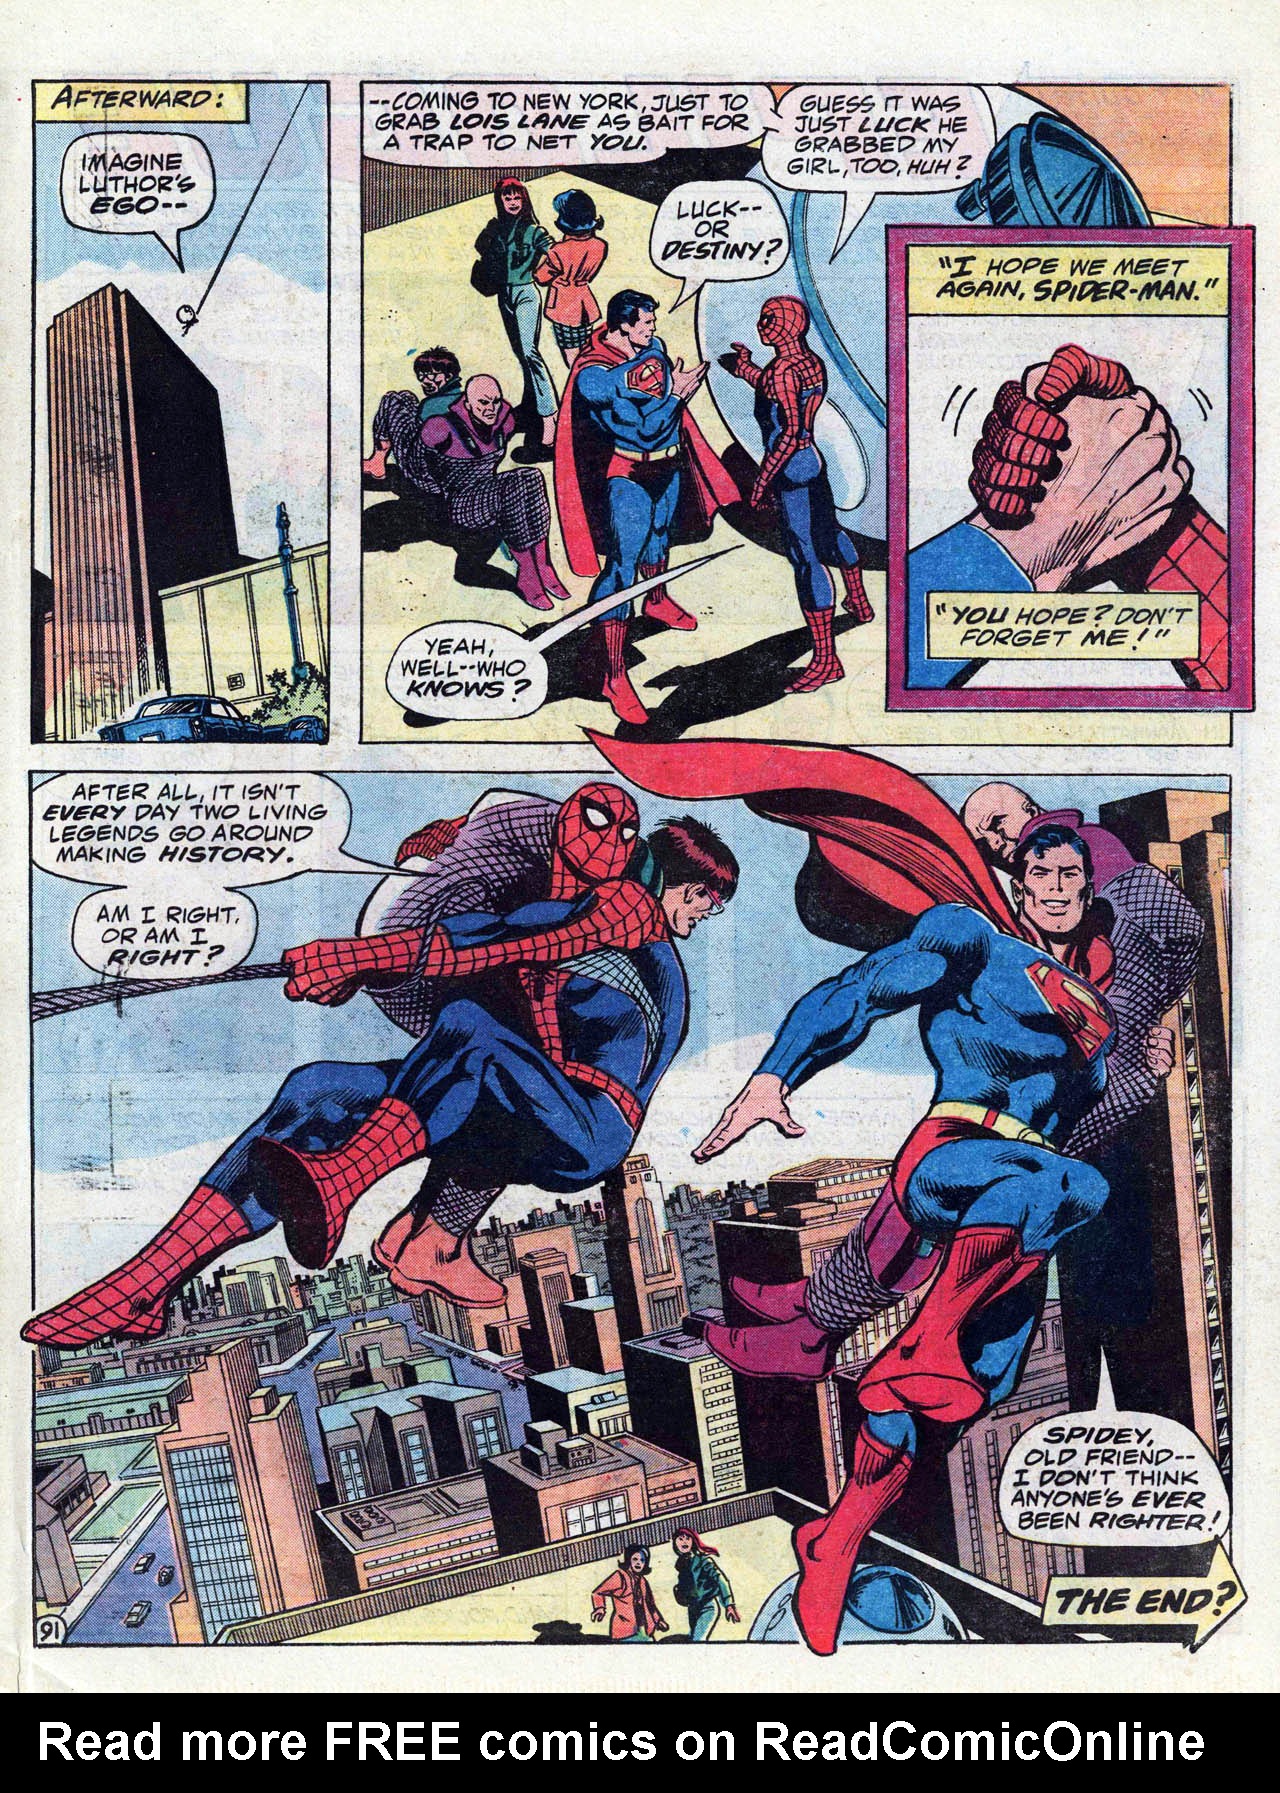 Superman vs. The Amazing Spider-Man 